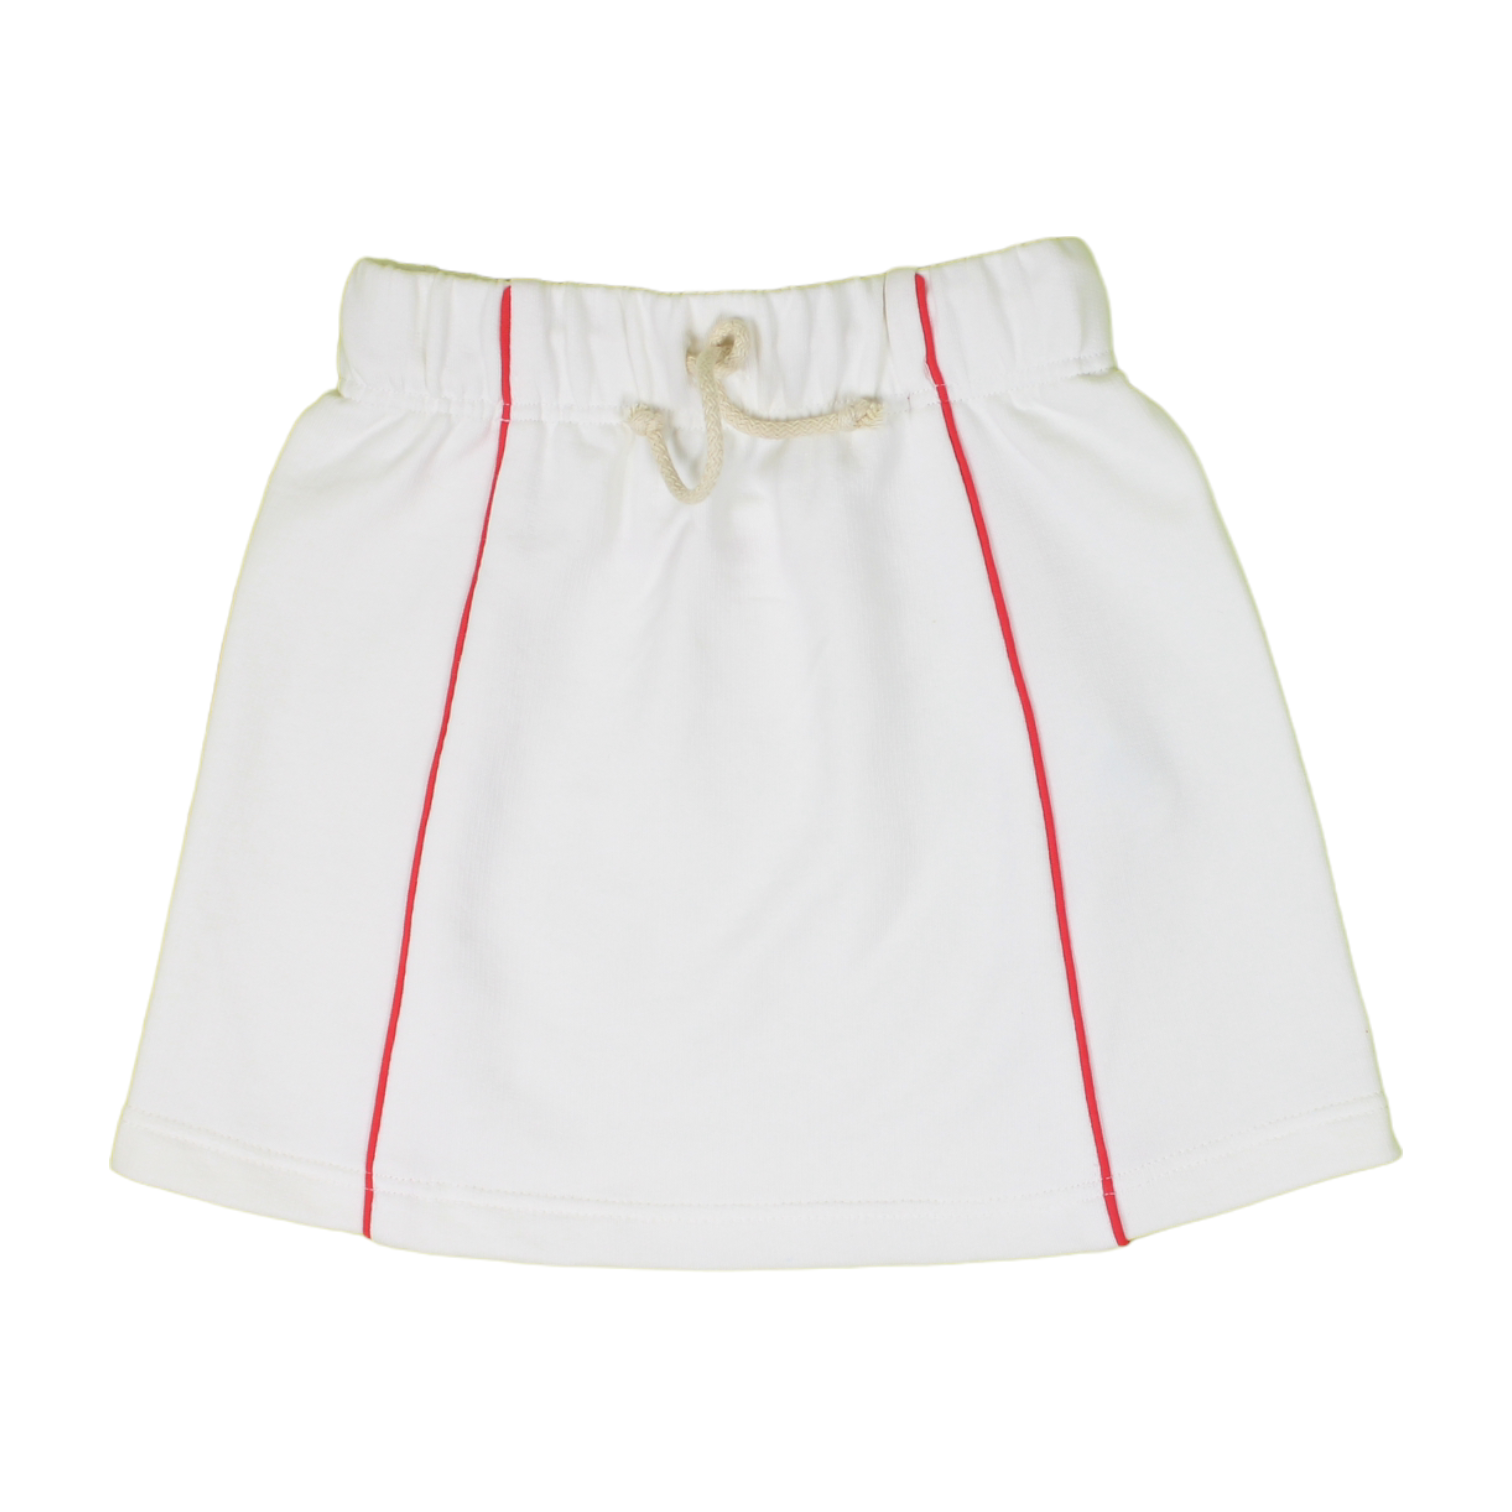 Raquette Marshmallow Skirt Set